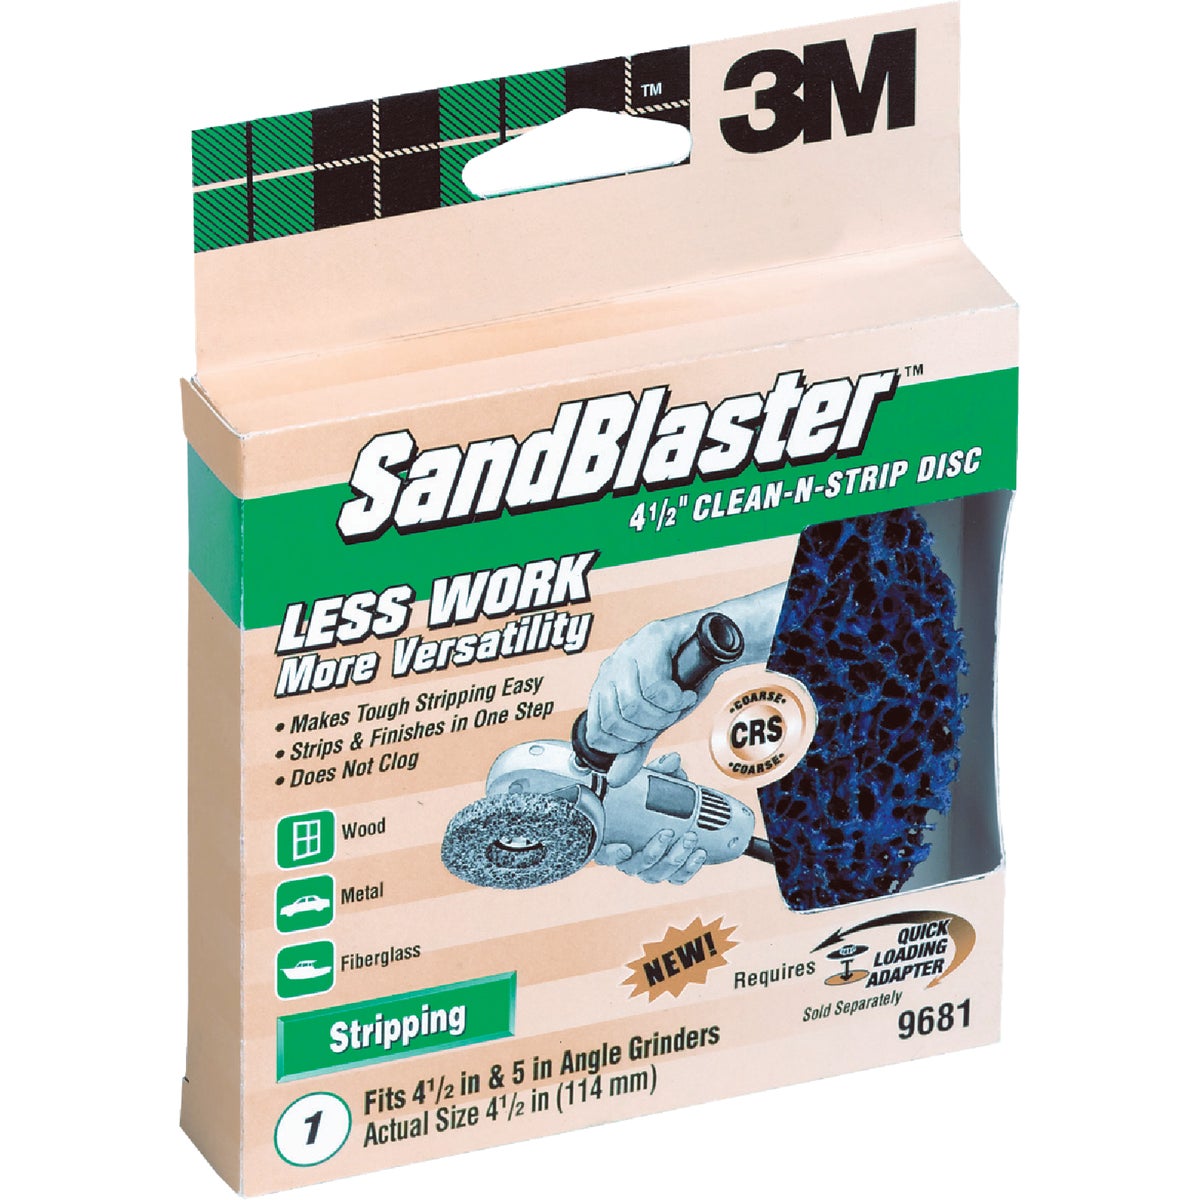 3M Sandblaster 4-1/2 In. Angle Grinder Stripping Disc